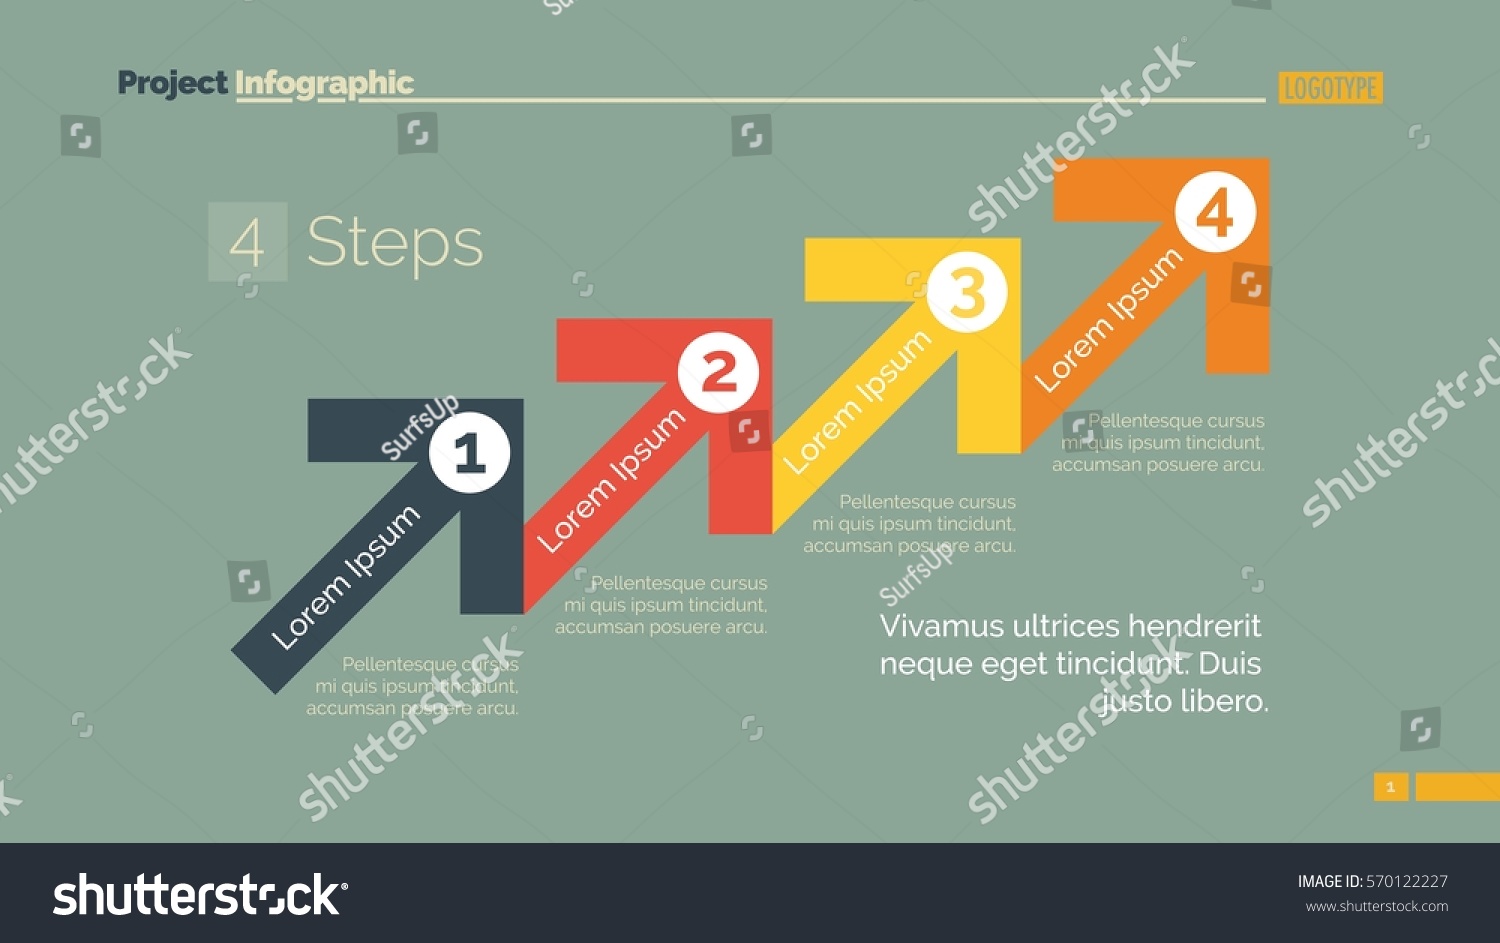 Four Step Process Chart Slide เวกเตอร์สต็อก ปลอดค่าลิขสิทธิ์ 570122227 Shutterstock 3199